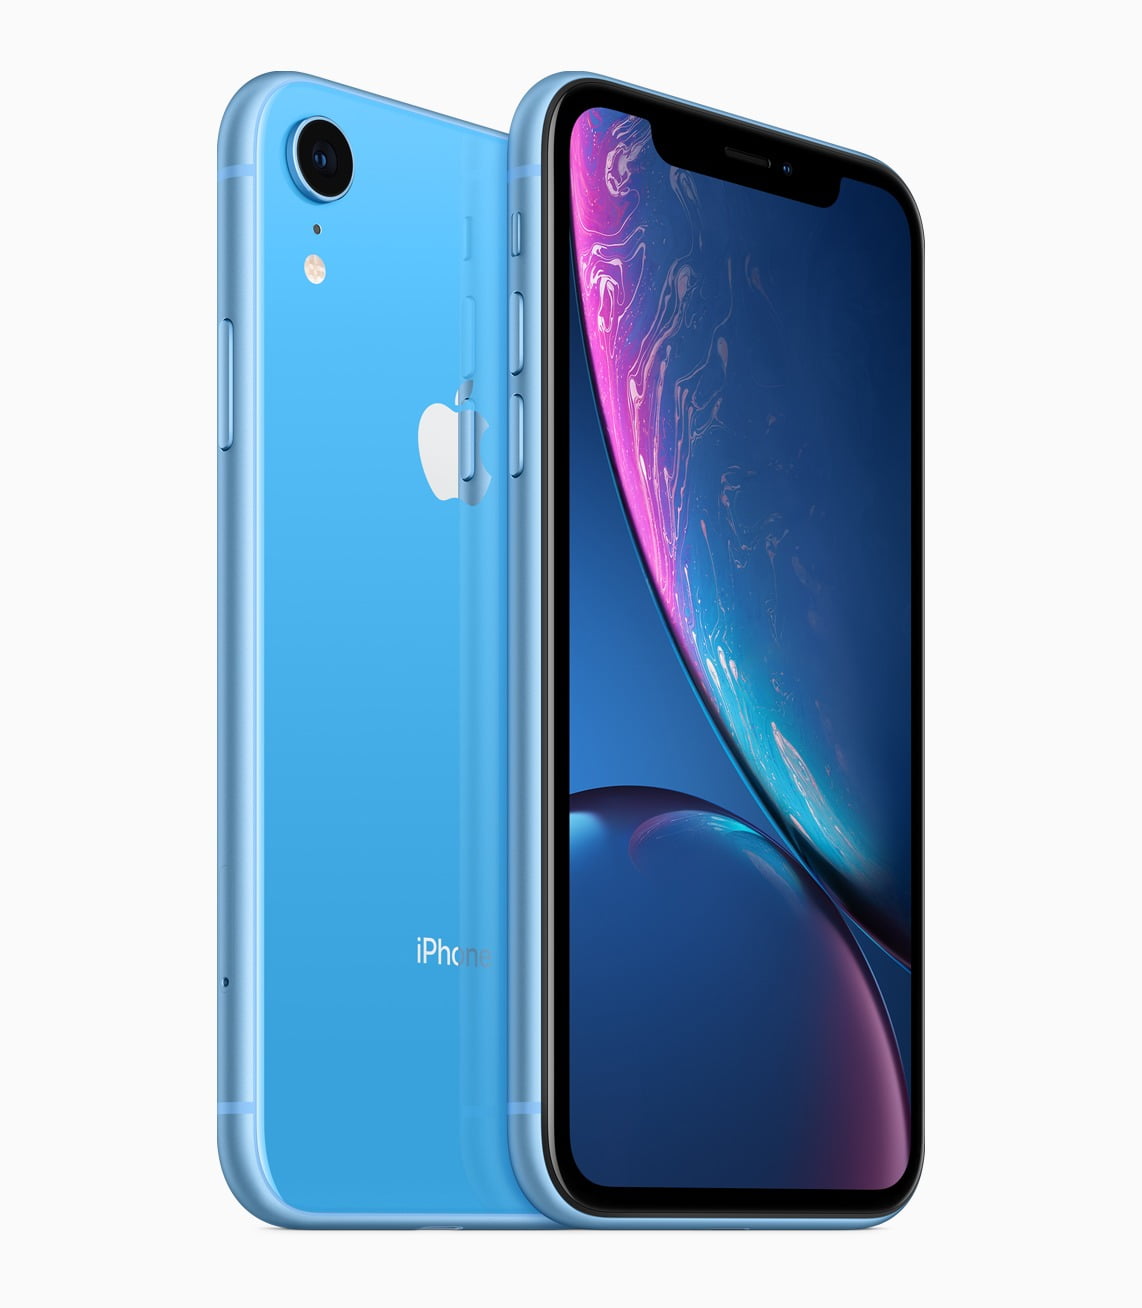 iPhone XR blue back 09122018